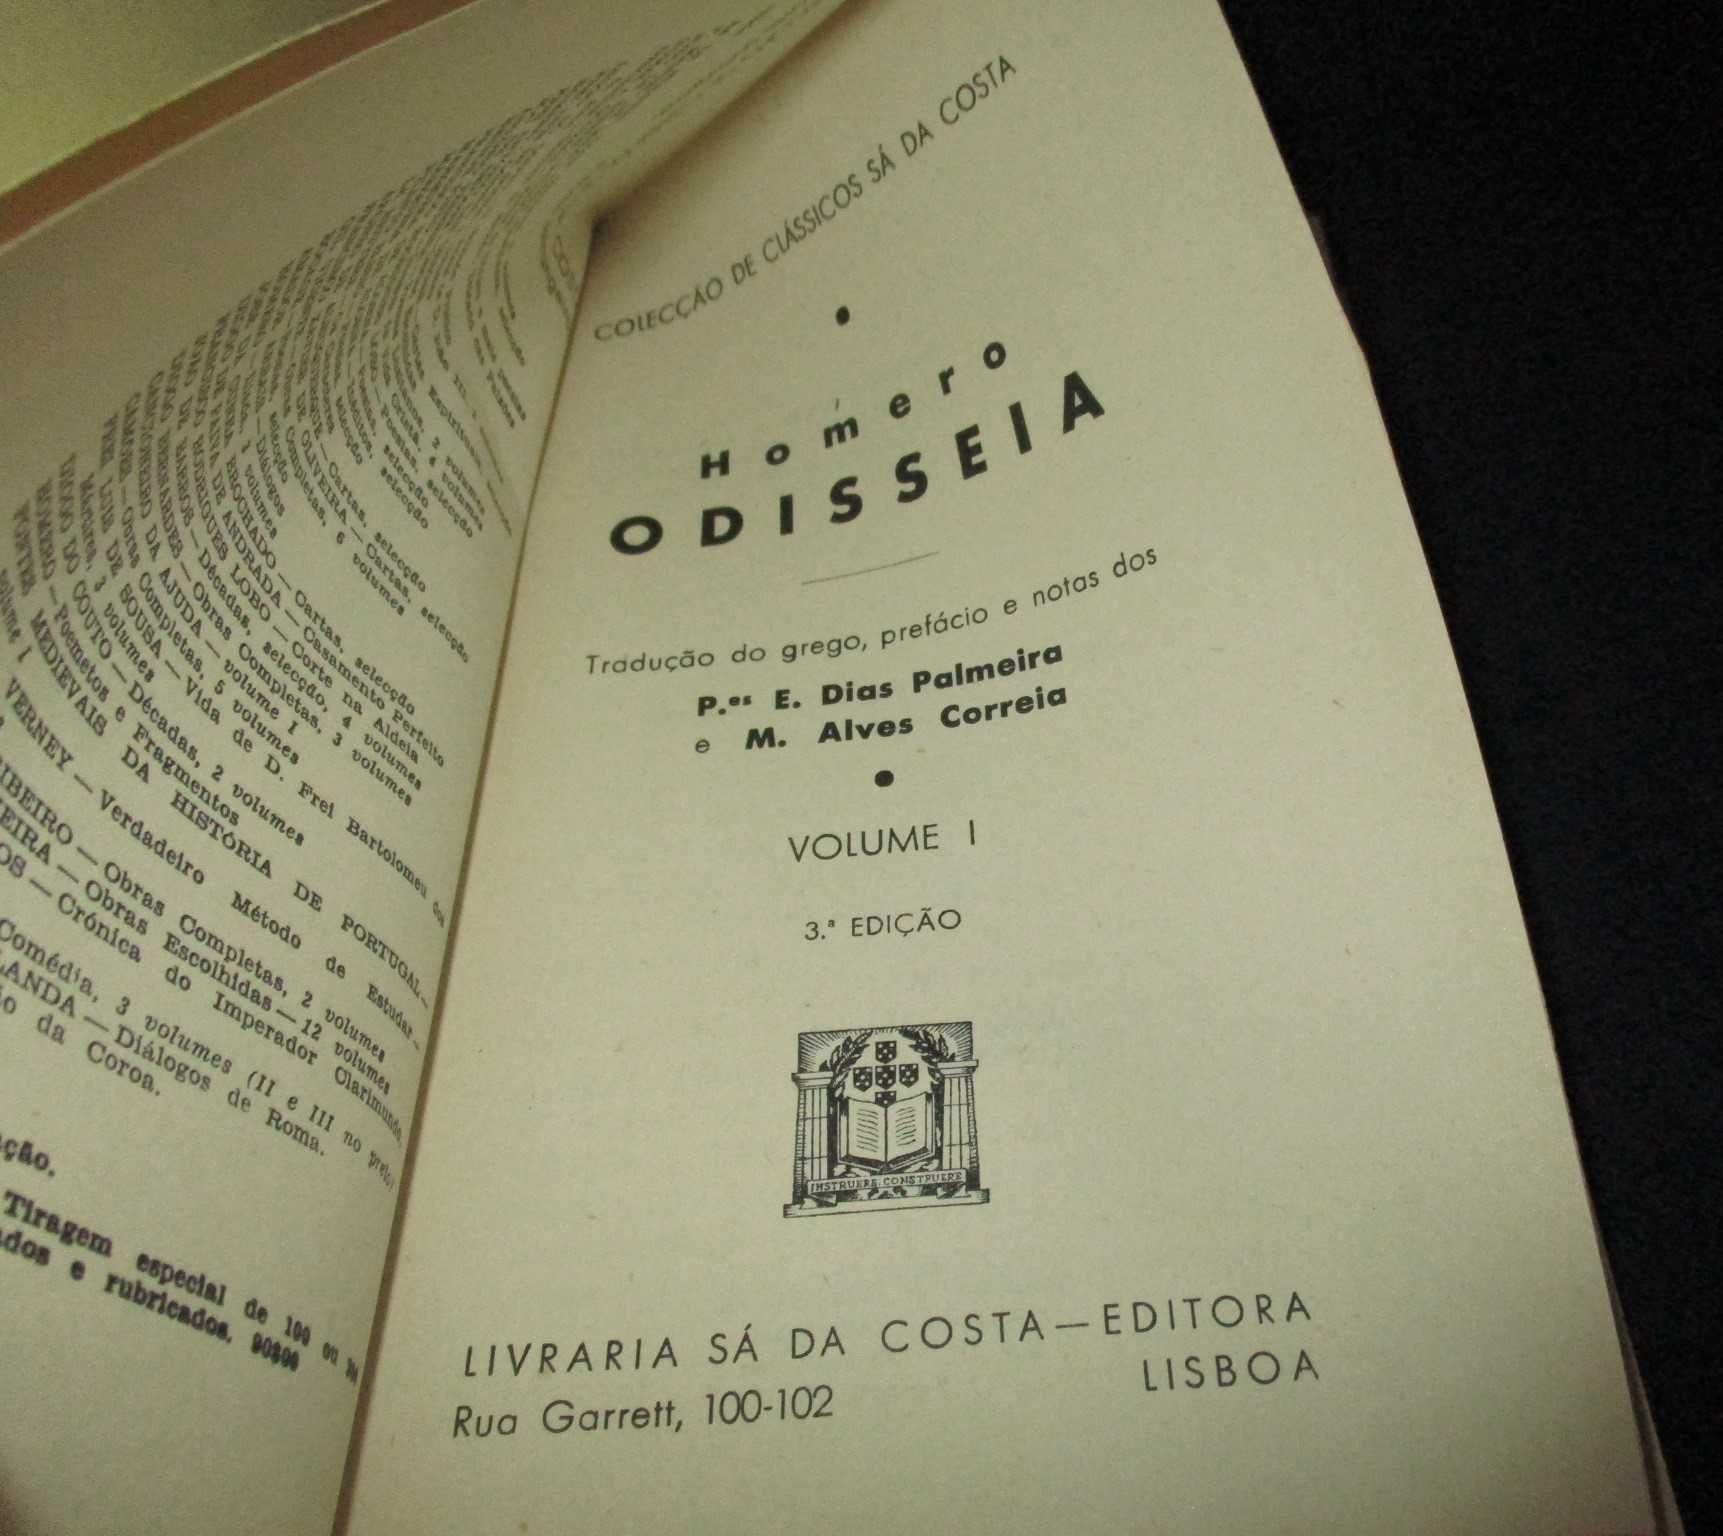 Livros Odisseia Homero 2 volumes Completo